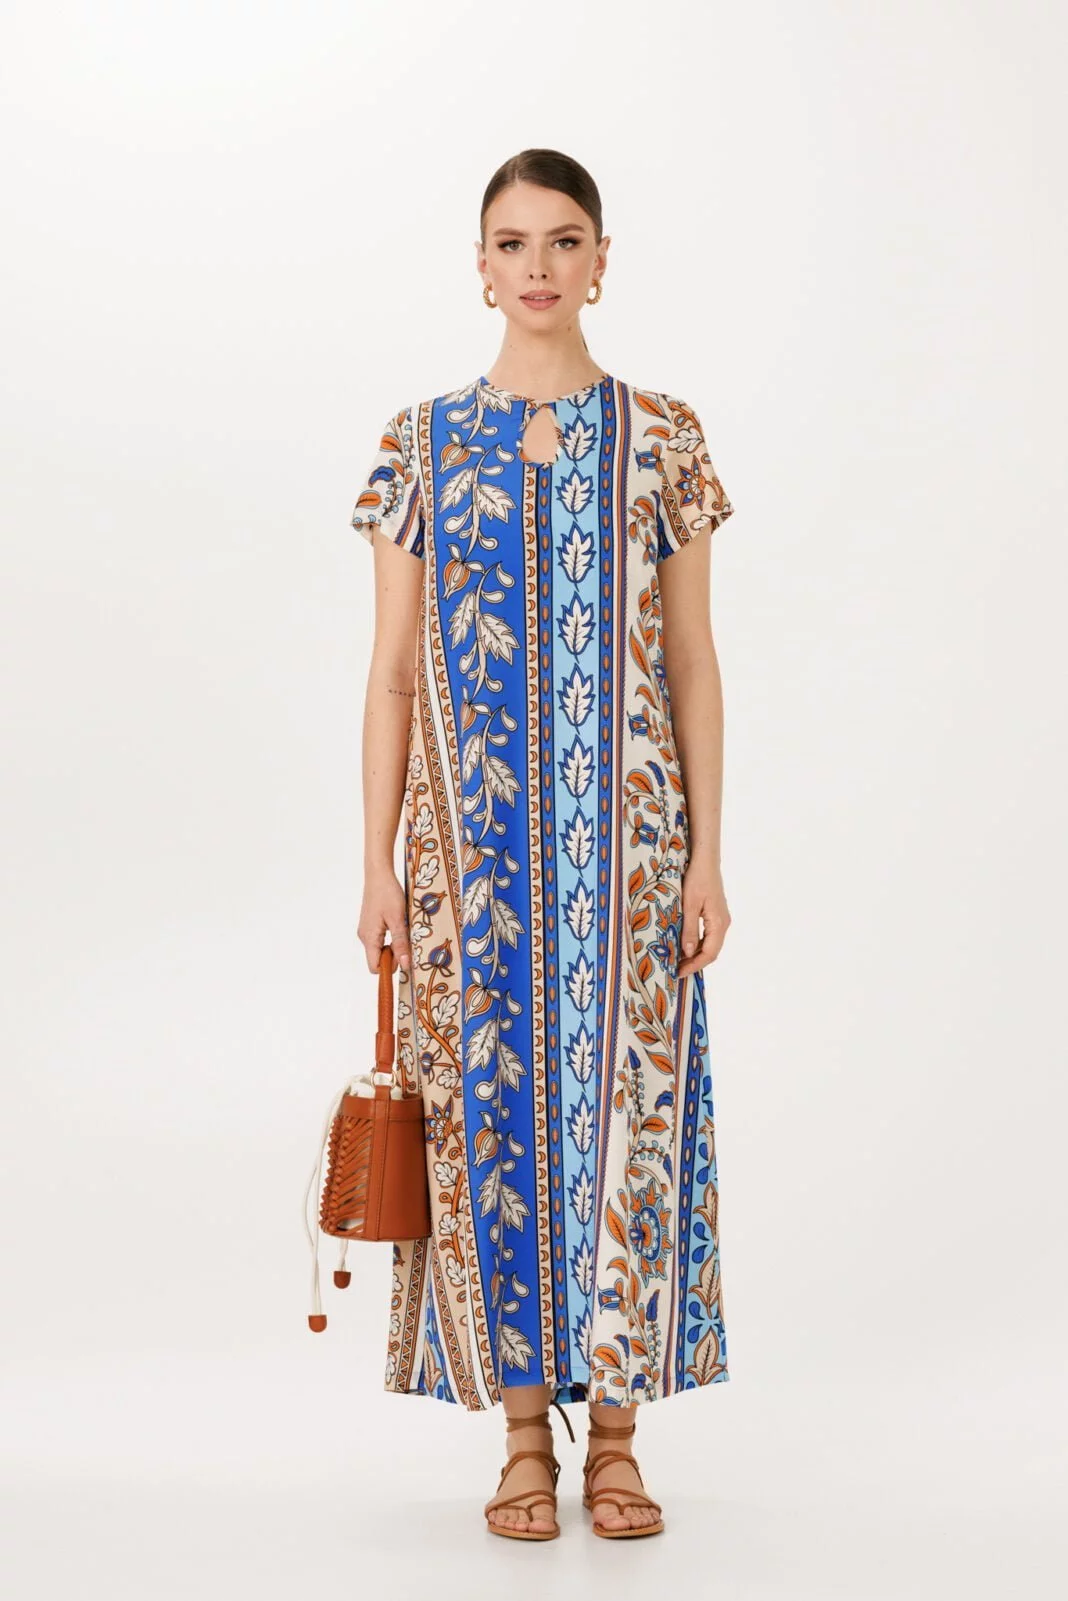 Beige and Blue Mediterranean-Inspired Maxi Length Short Sleeve Kaftan Dress - Elegant Summer Fashion